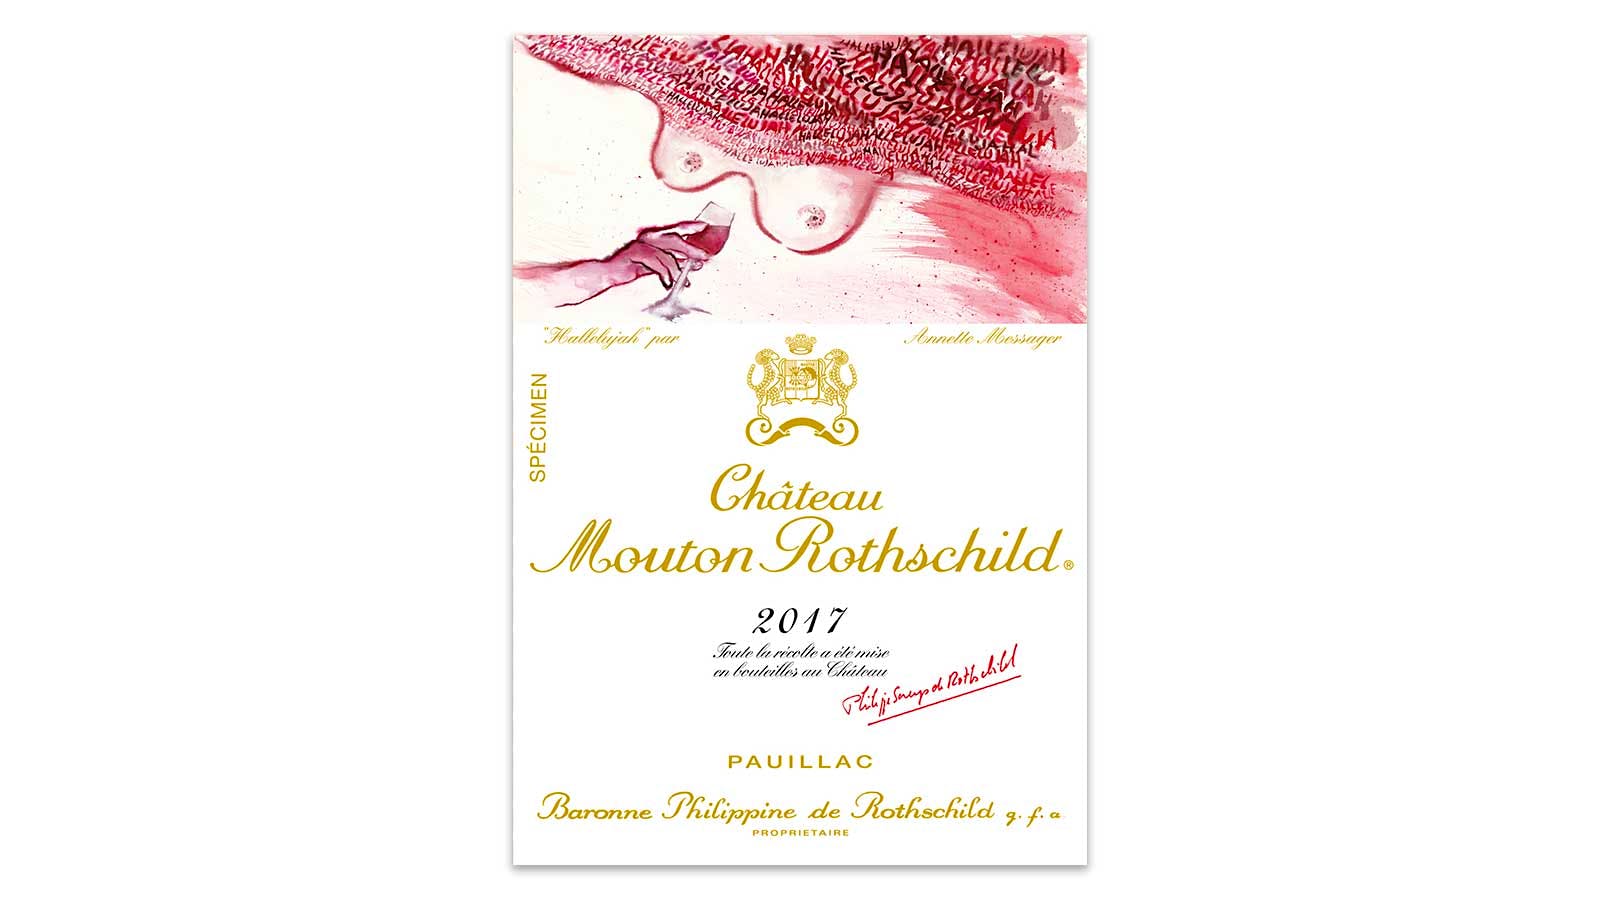 Mouton-Rothschild 2017 label